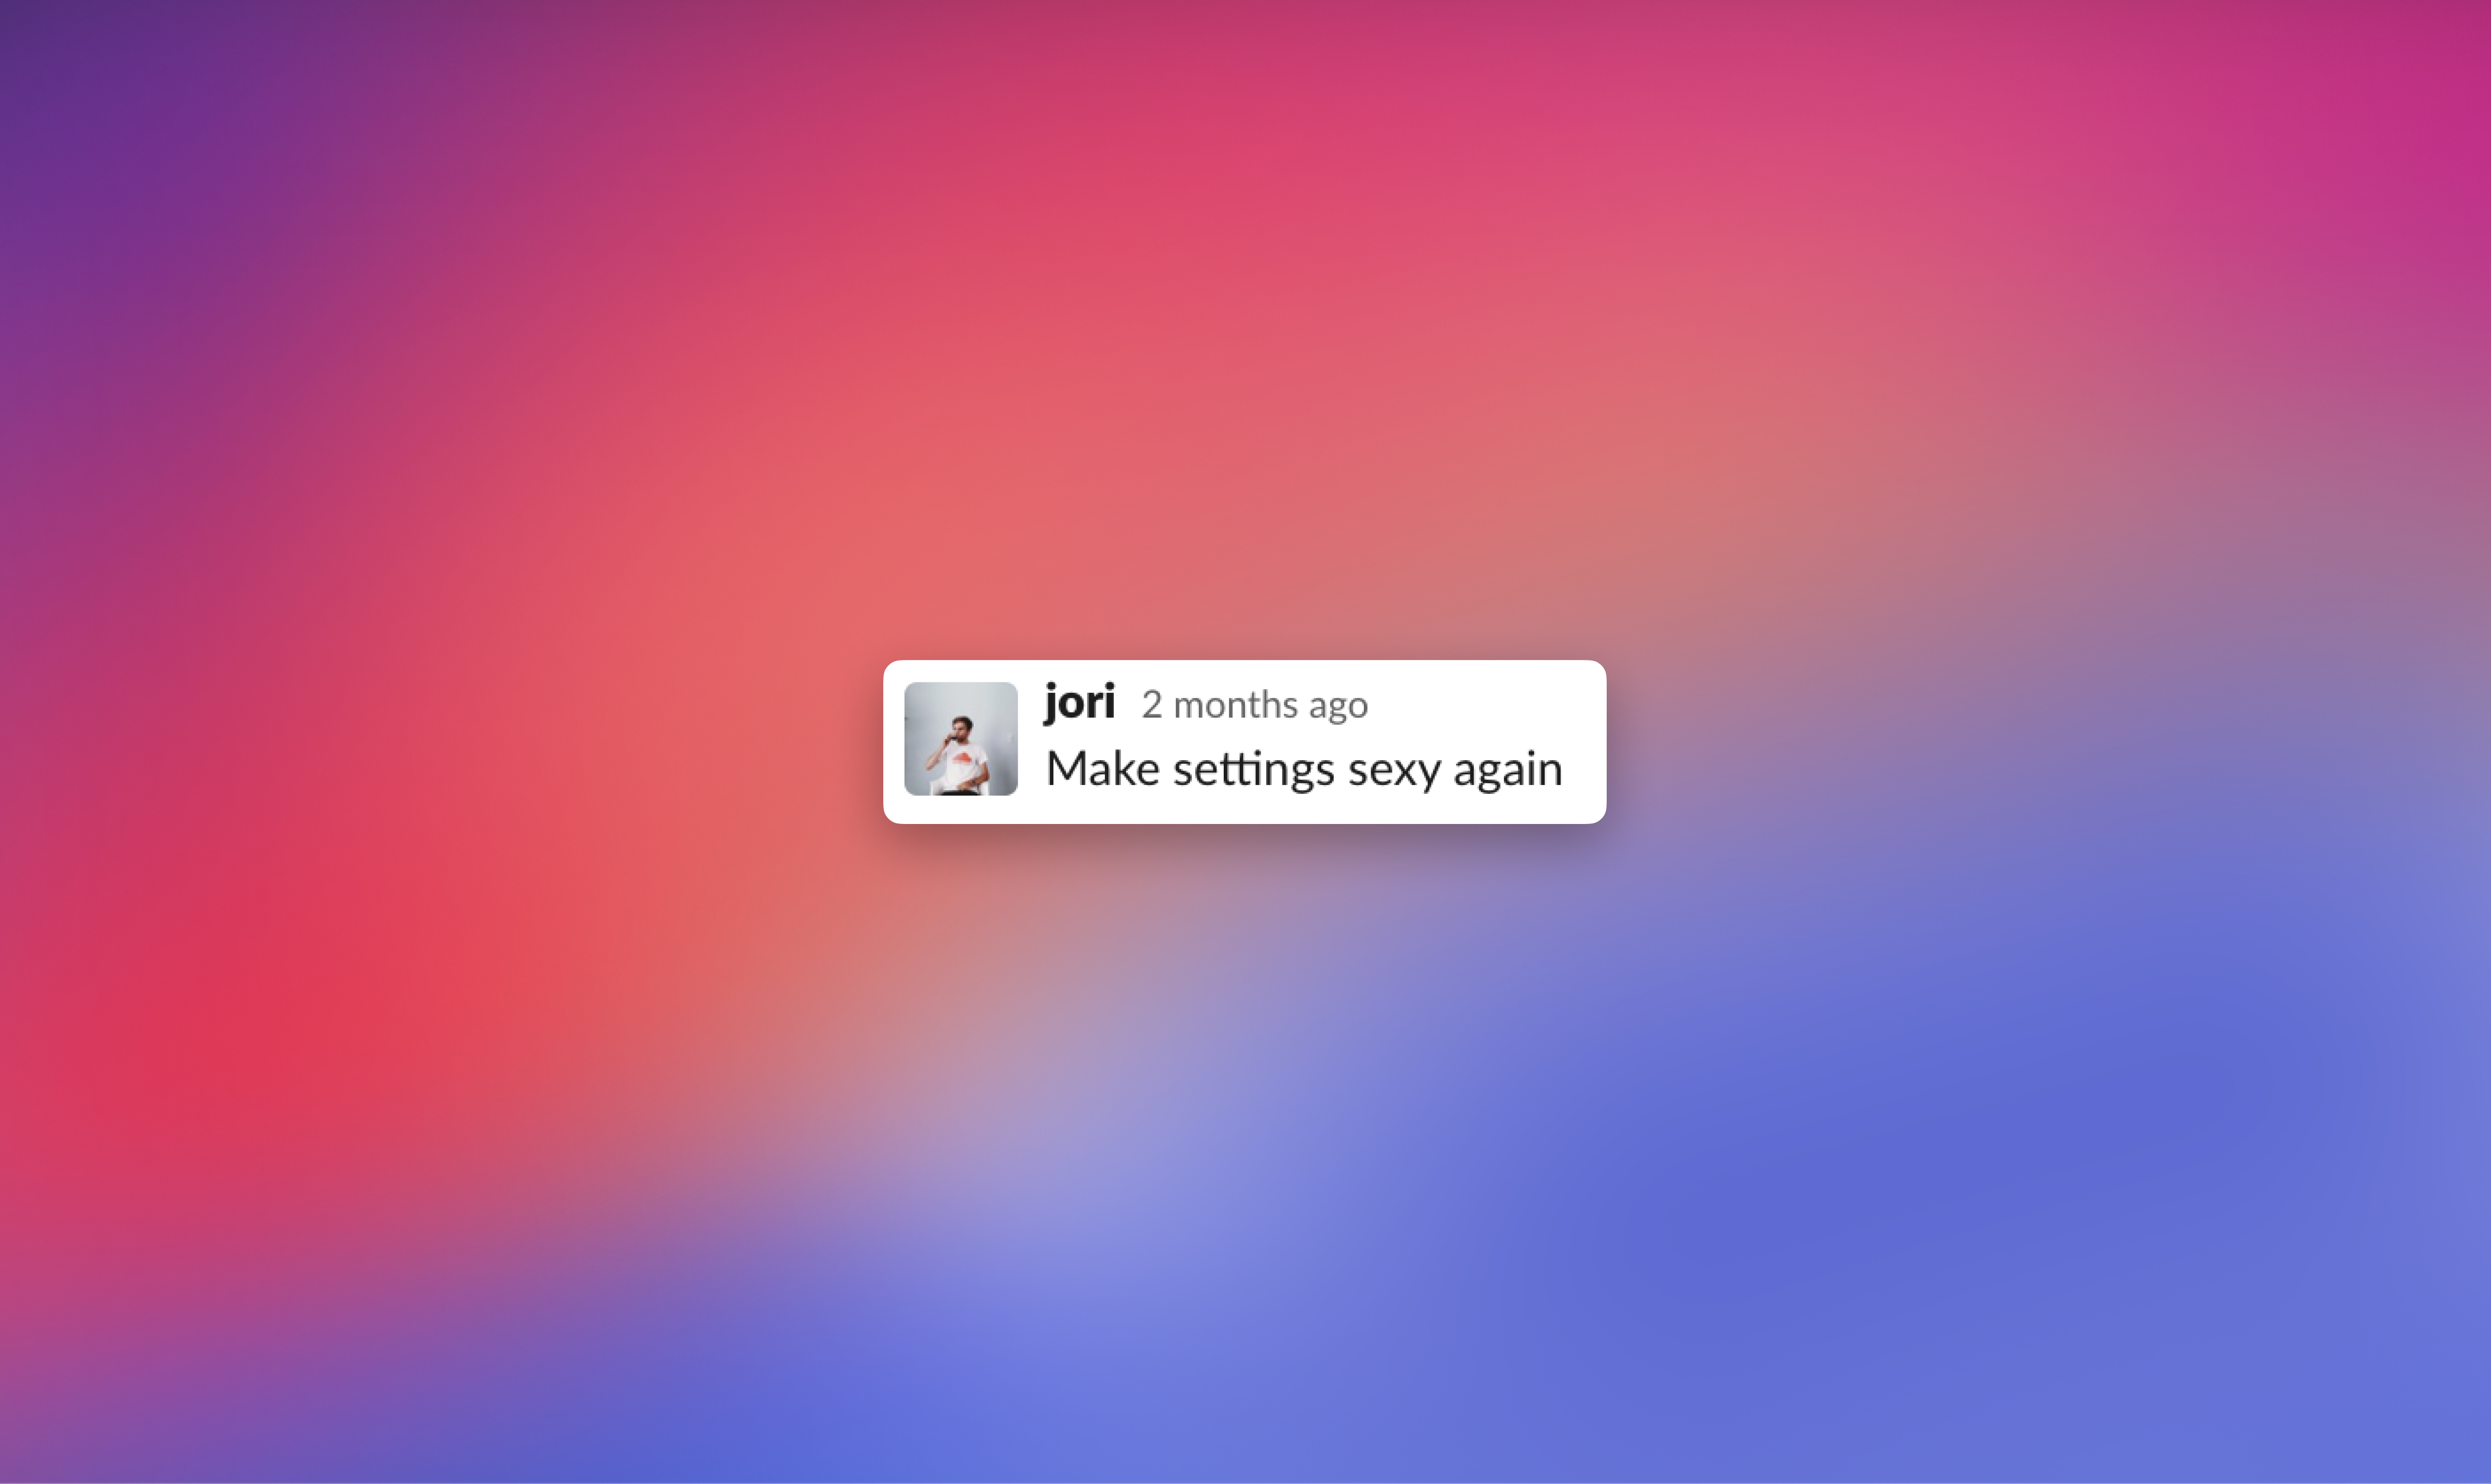 A slack message from jori: "Make settings sexy again"